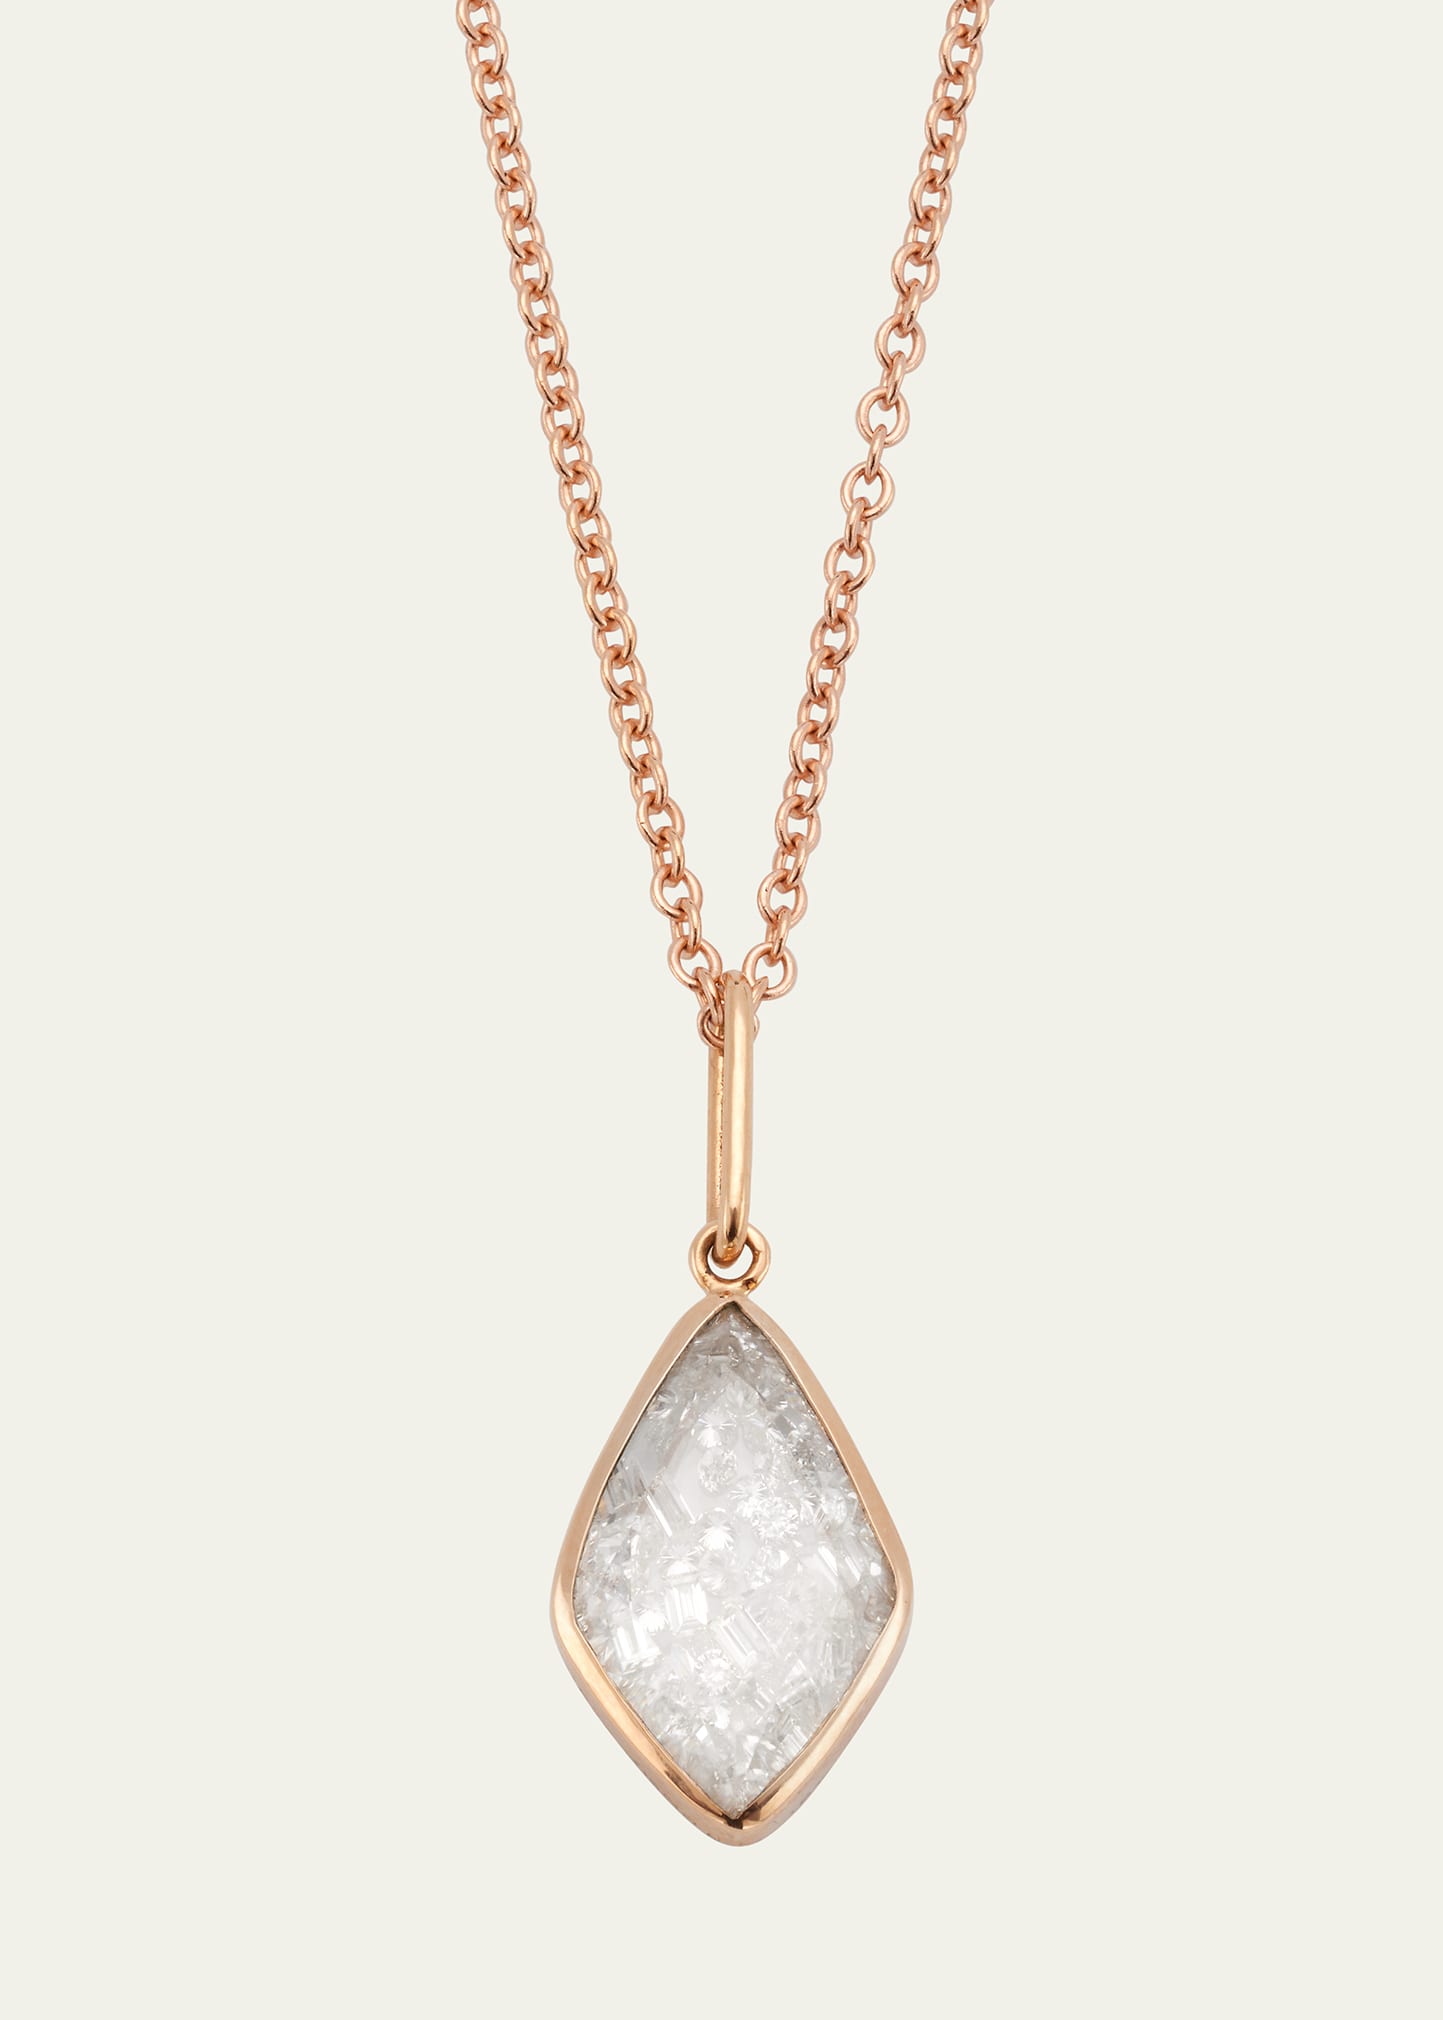 Moritz Glik Baby Kite Diamond Pendant Necklace